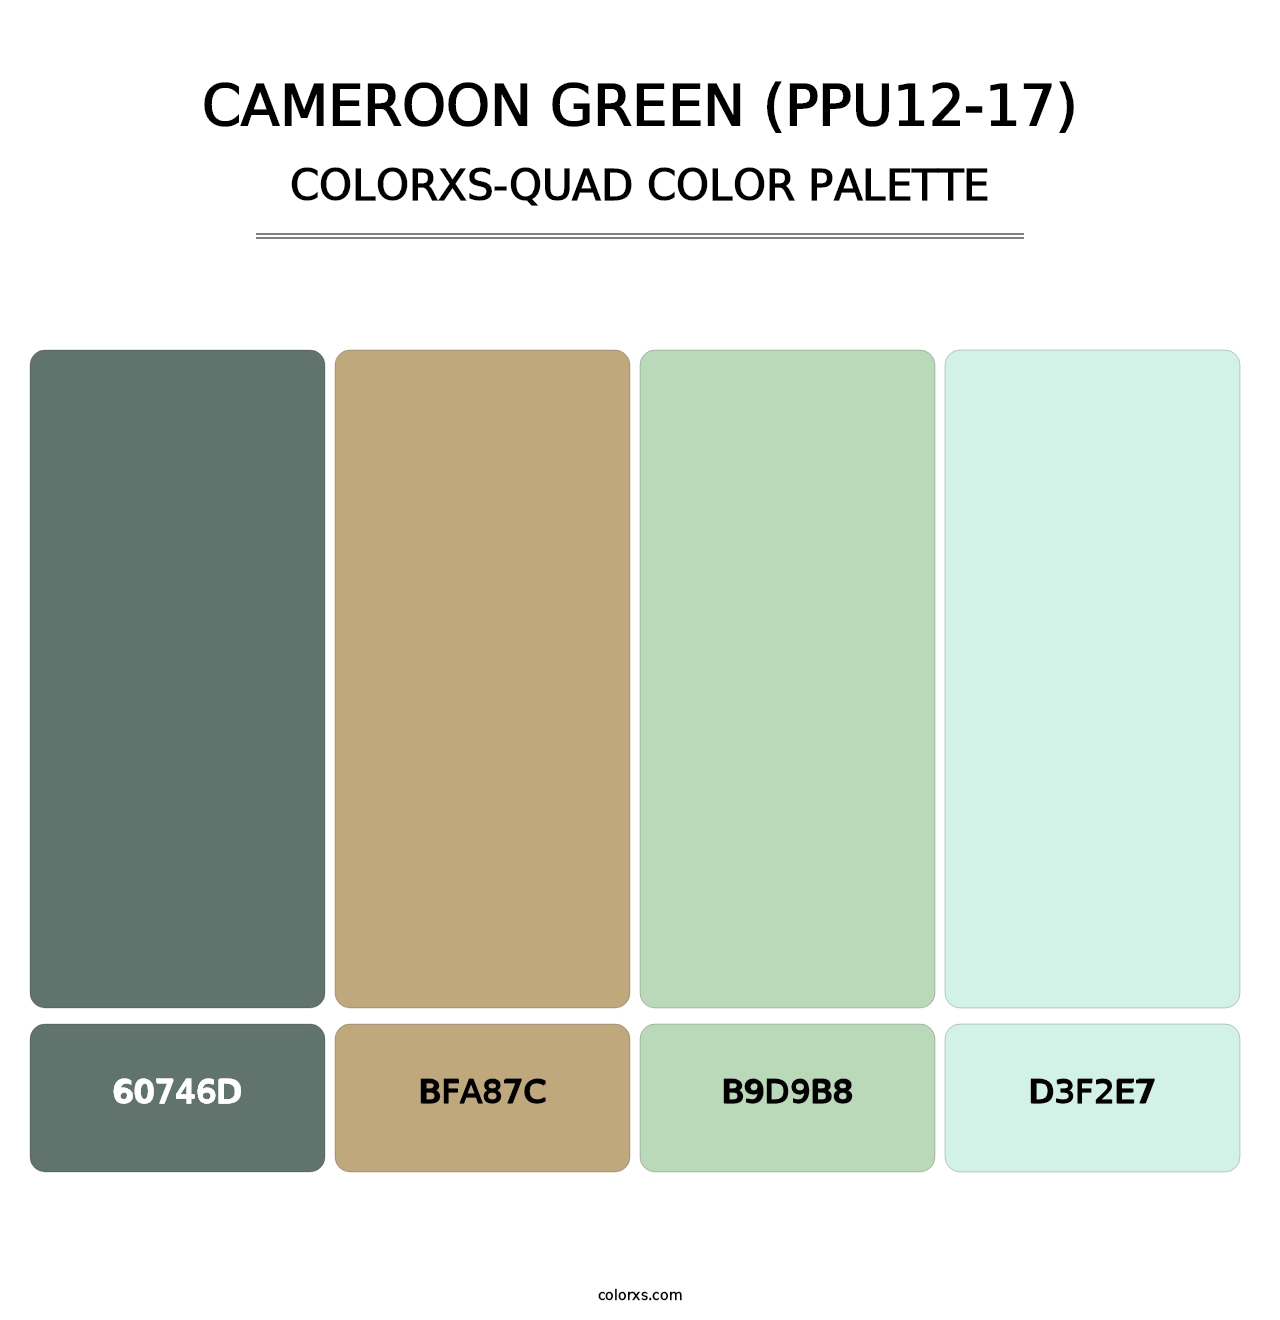 Cameroon Green (PPU12-17) - Colorxs Quad Palette